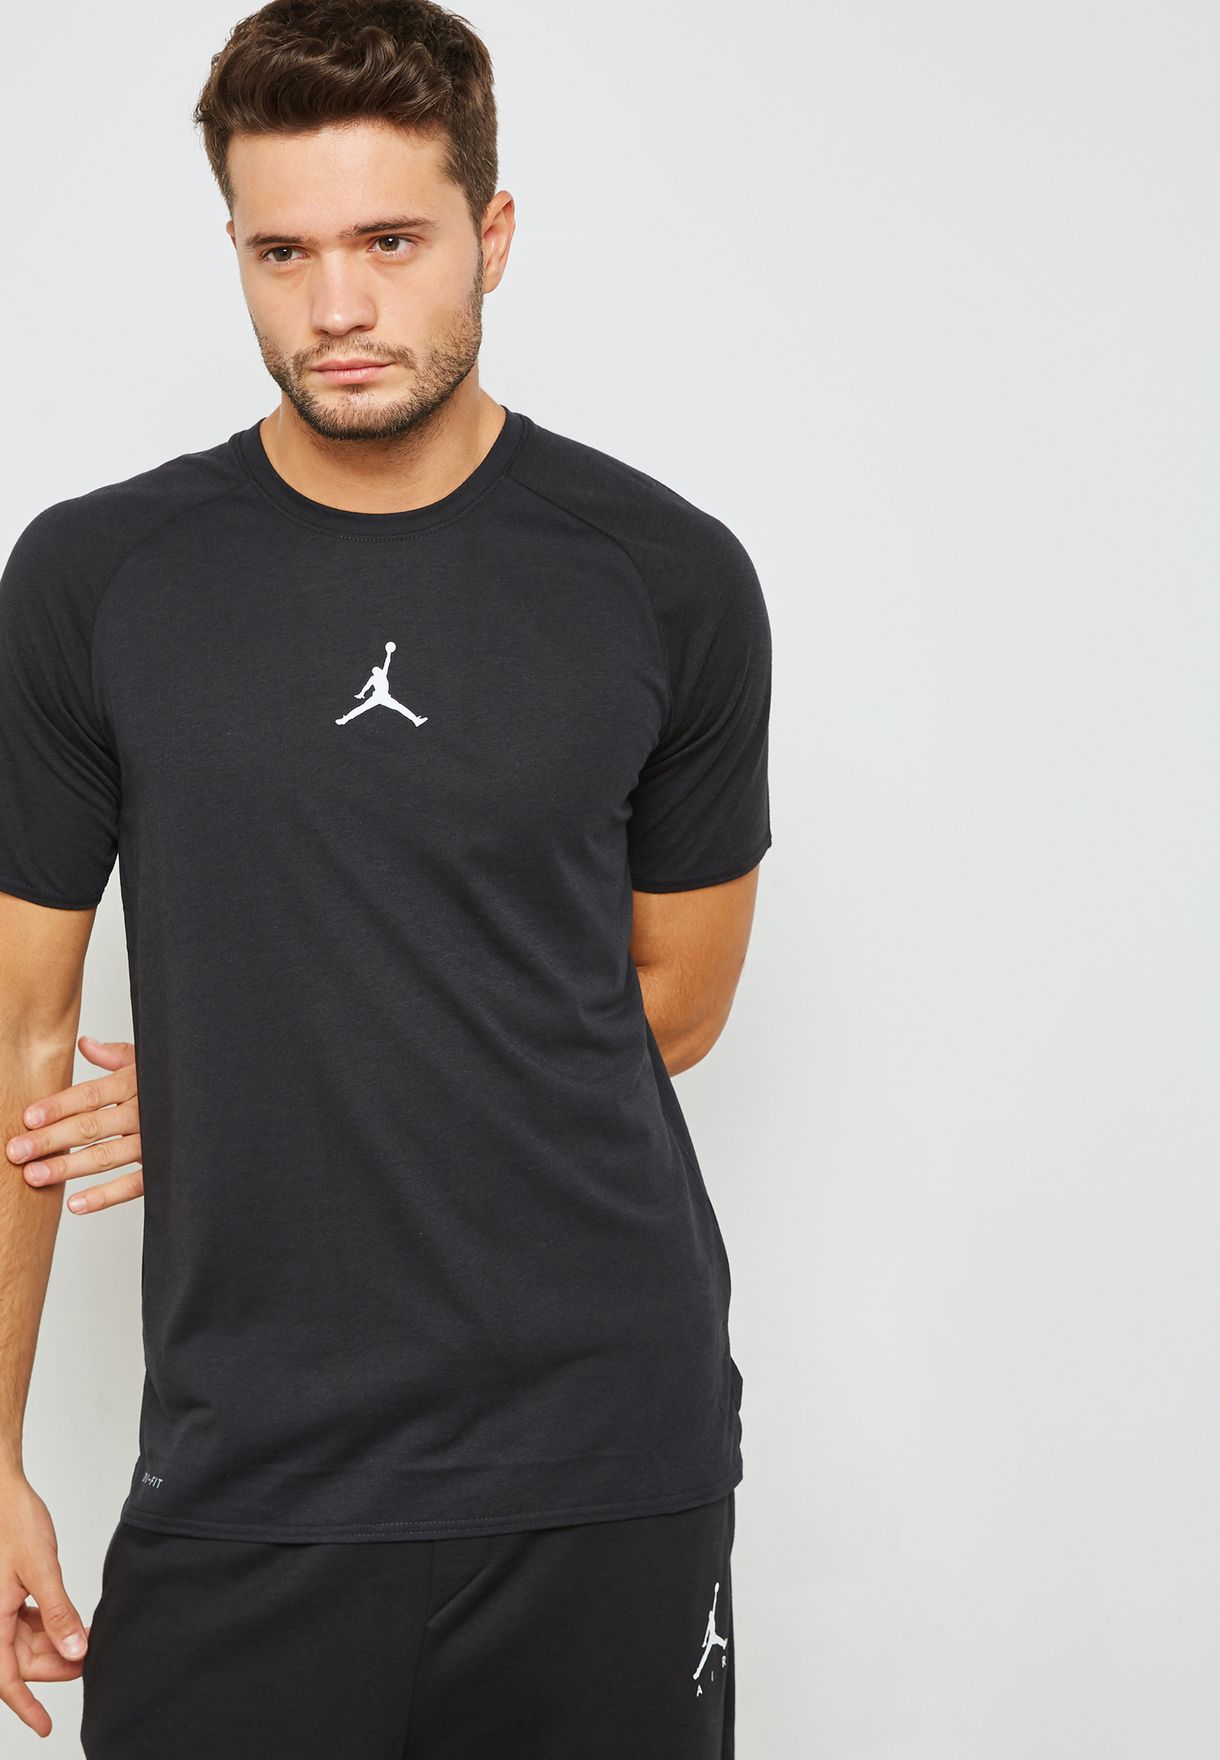 Nike Jordan 23 Alpha t-shirt 102 889713-102